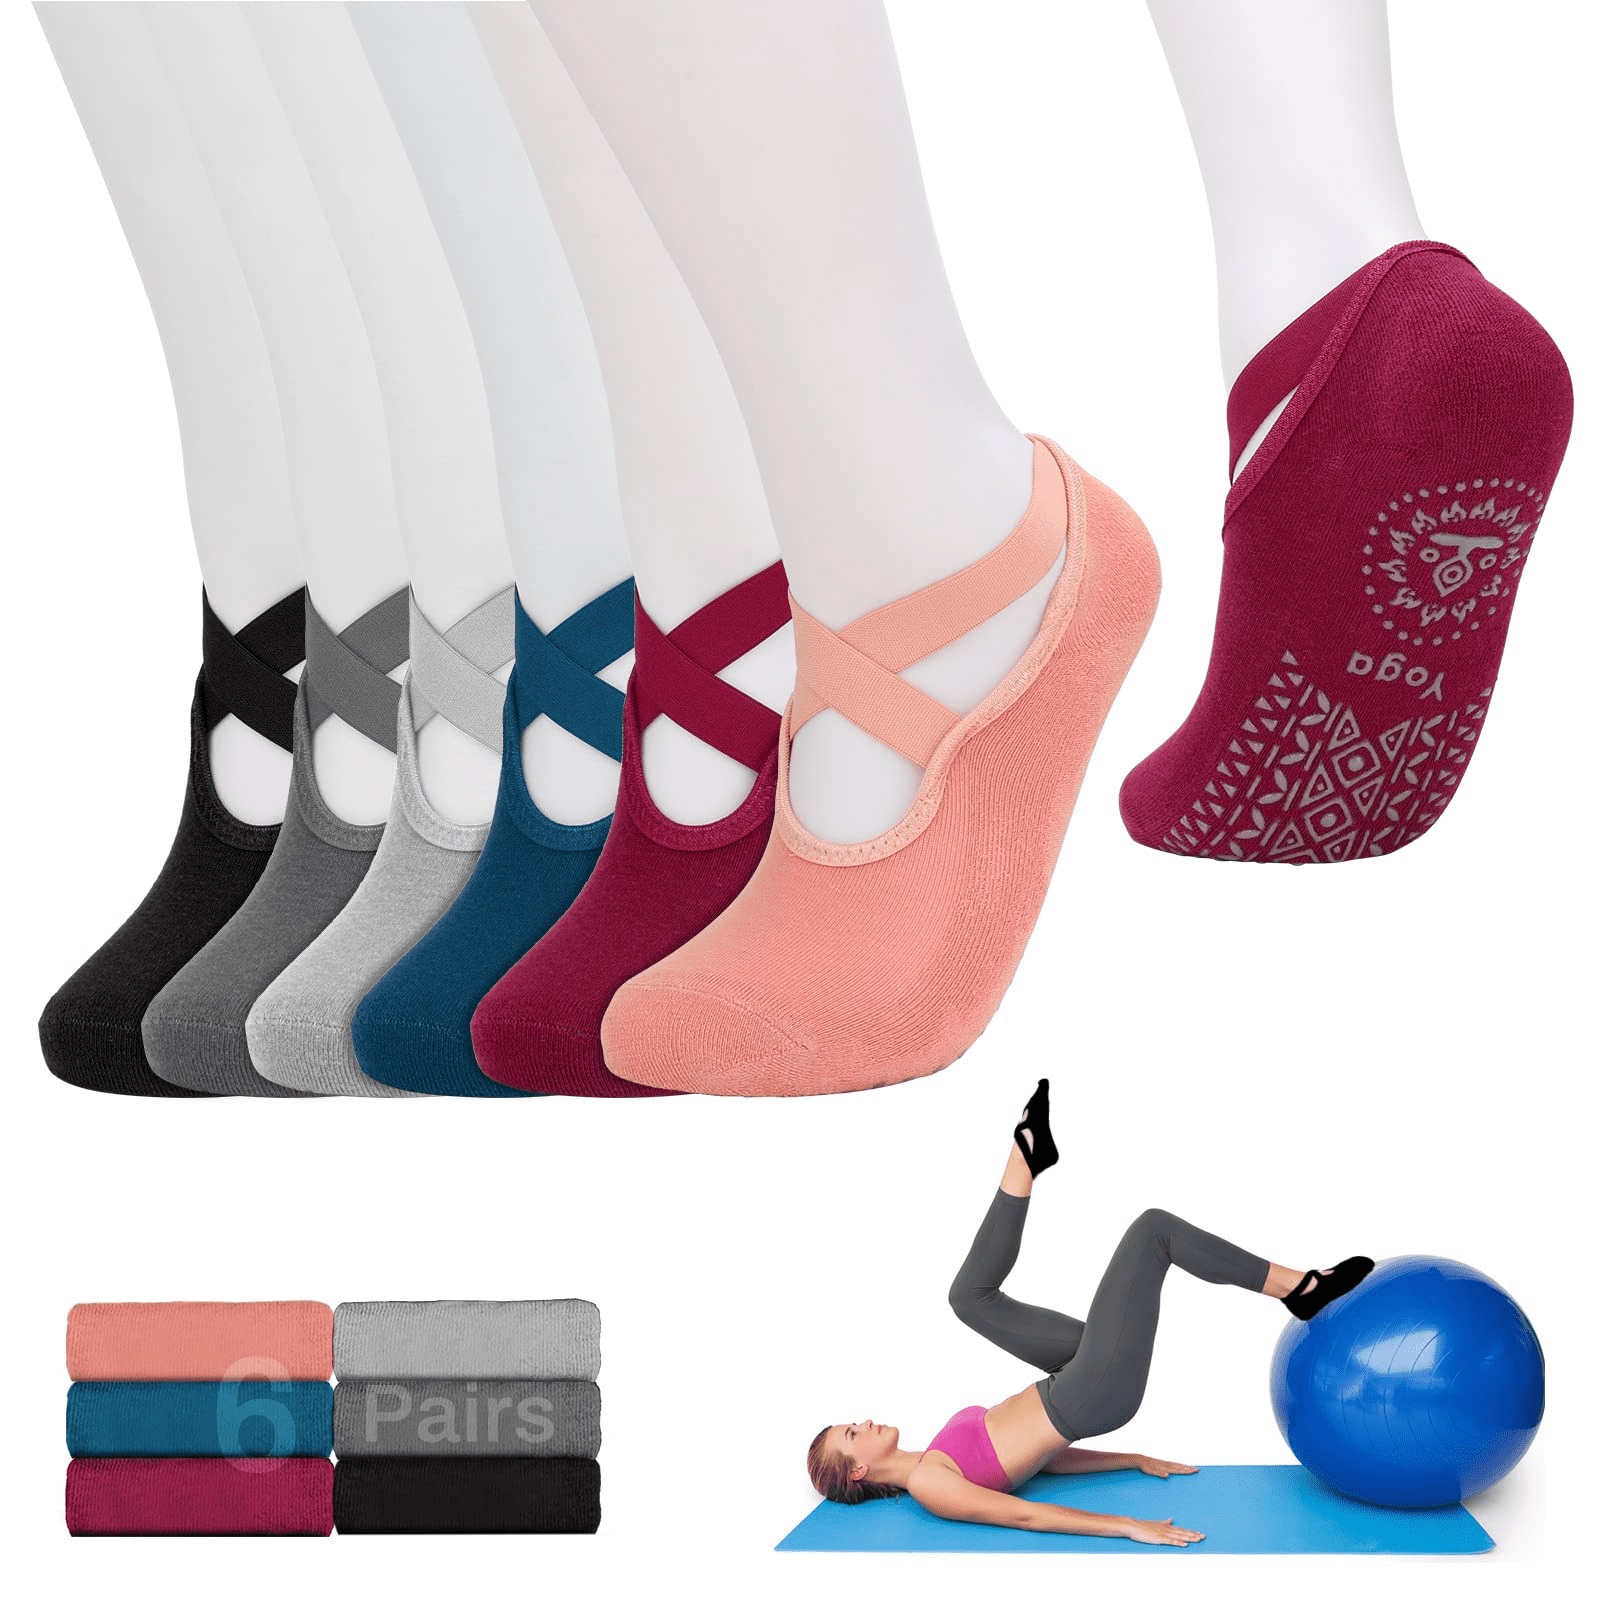 Yoga Socks Women Non Slip Anti-Skid Pilate Grip Socks 1 Pair Pink & 1 Pair Black 